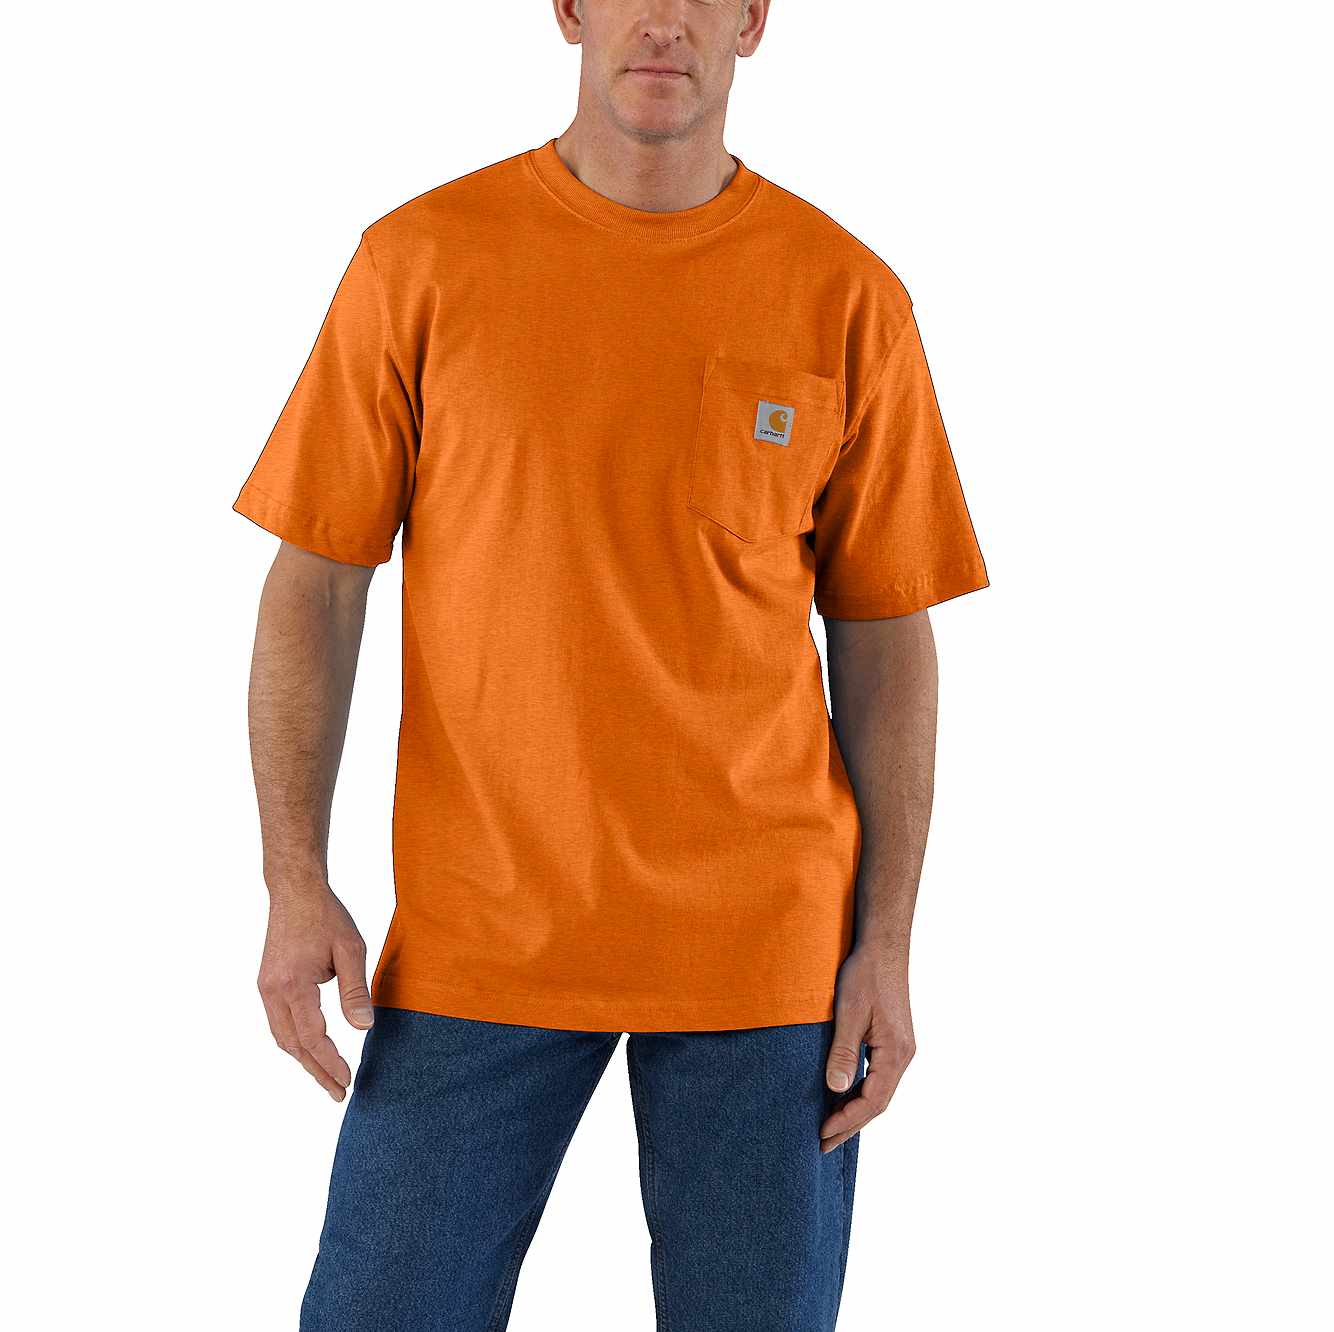 Carhartt 100% cotton original fit solid brown s/s T-shirt